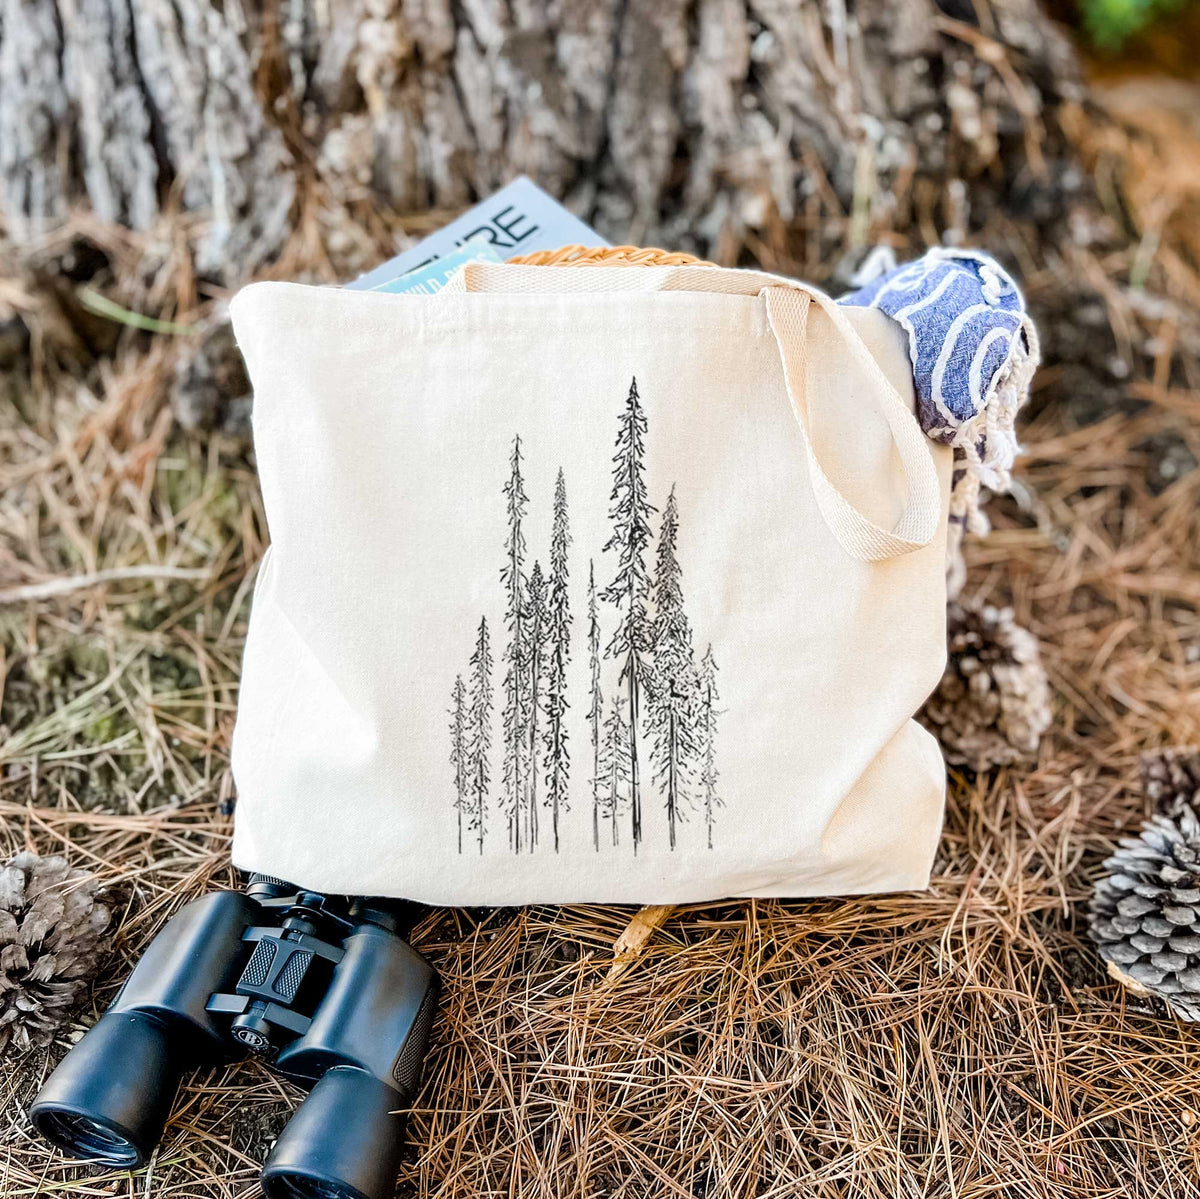 Black Spruce (Picea mariana) - Tote Bag